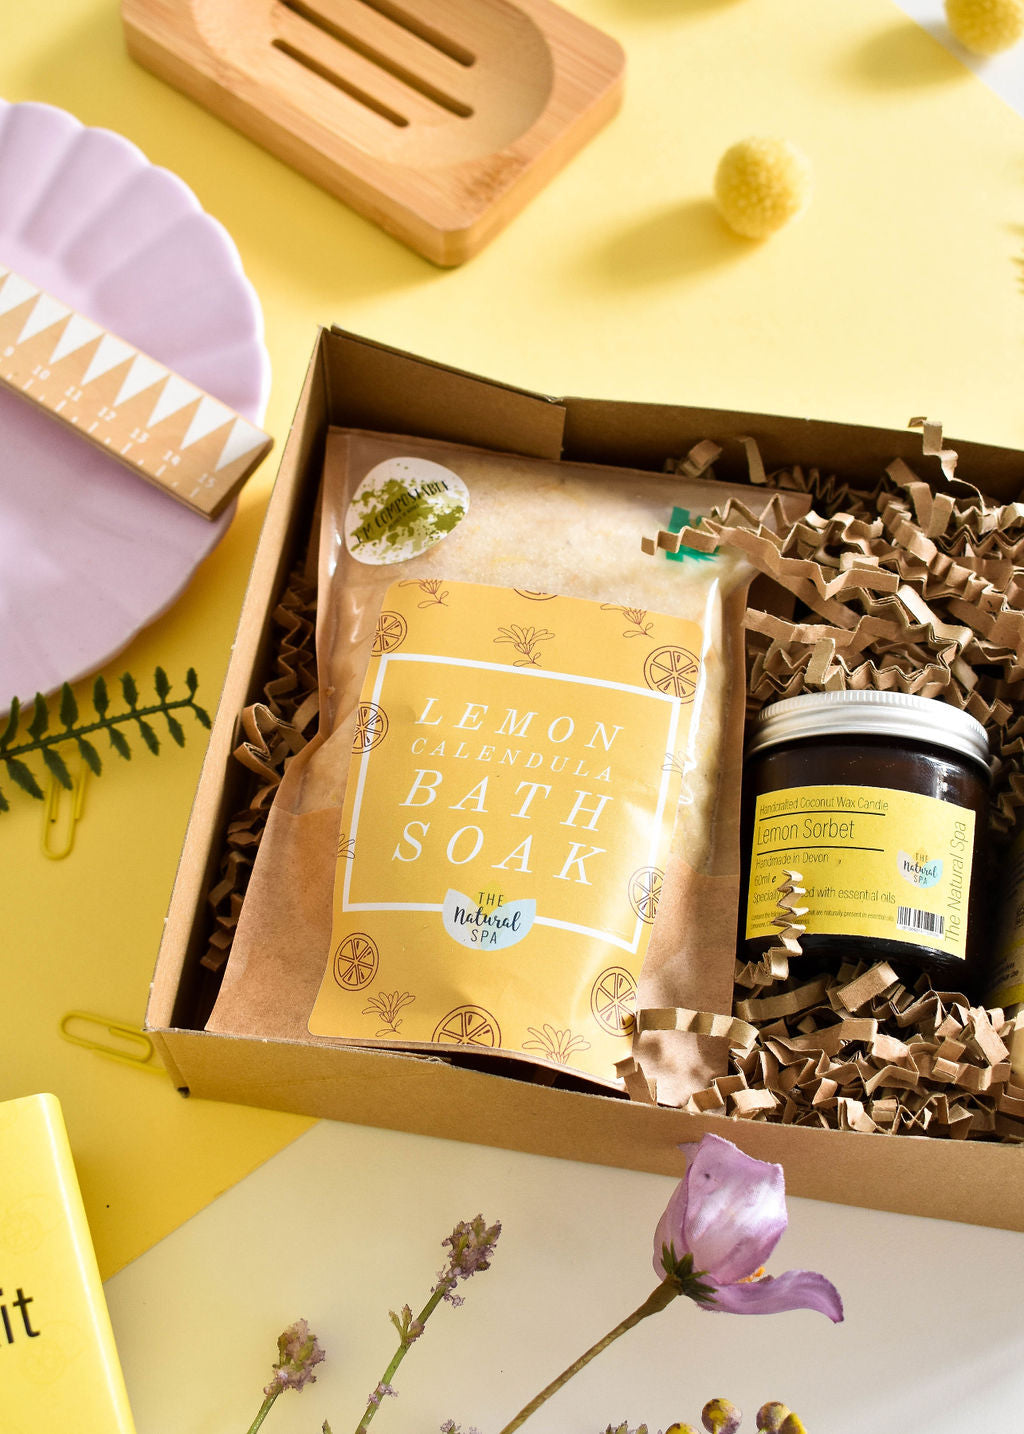 Lemon Sorbet At Home Natural Spa Set - Bring the spa to your door-5